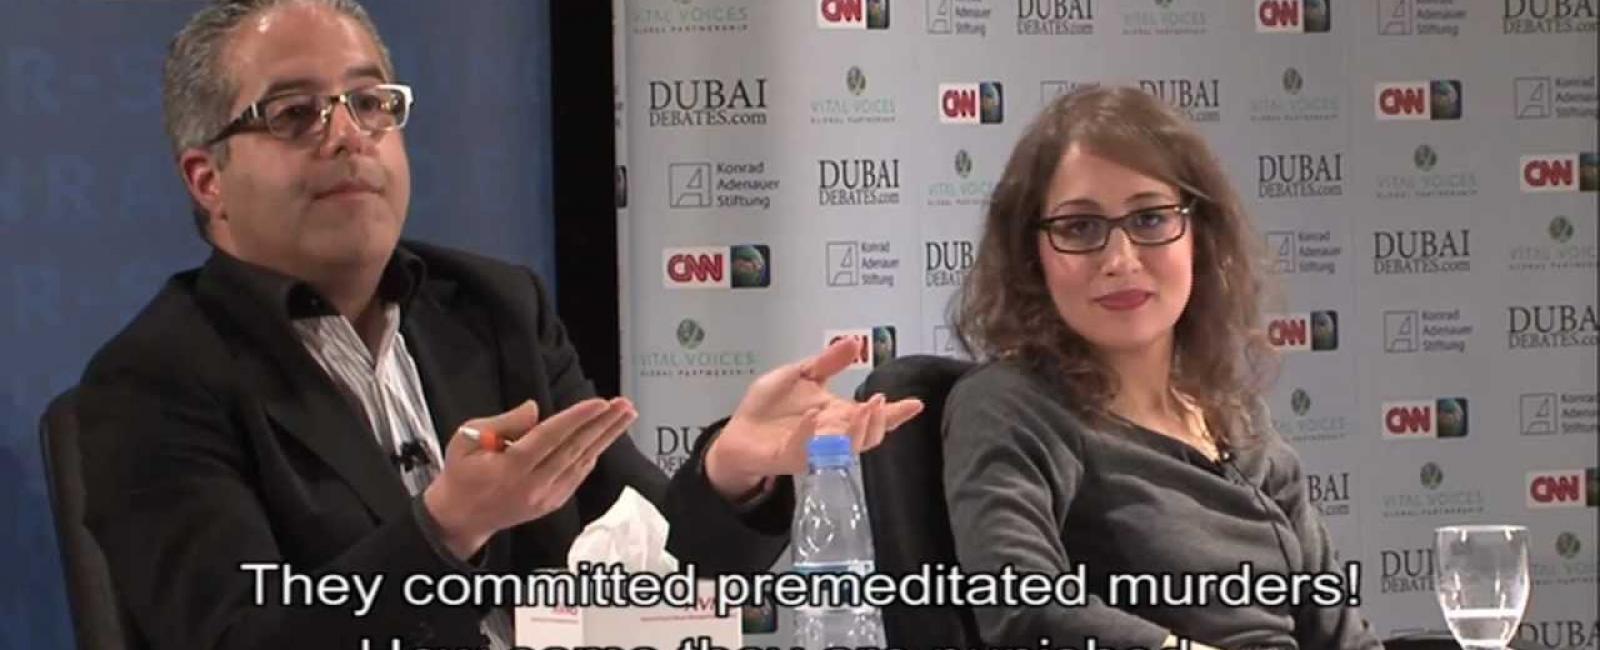 Arab women's rights won't change Arab social attitudes (Dubai Debates 4)